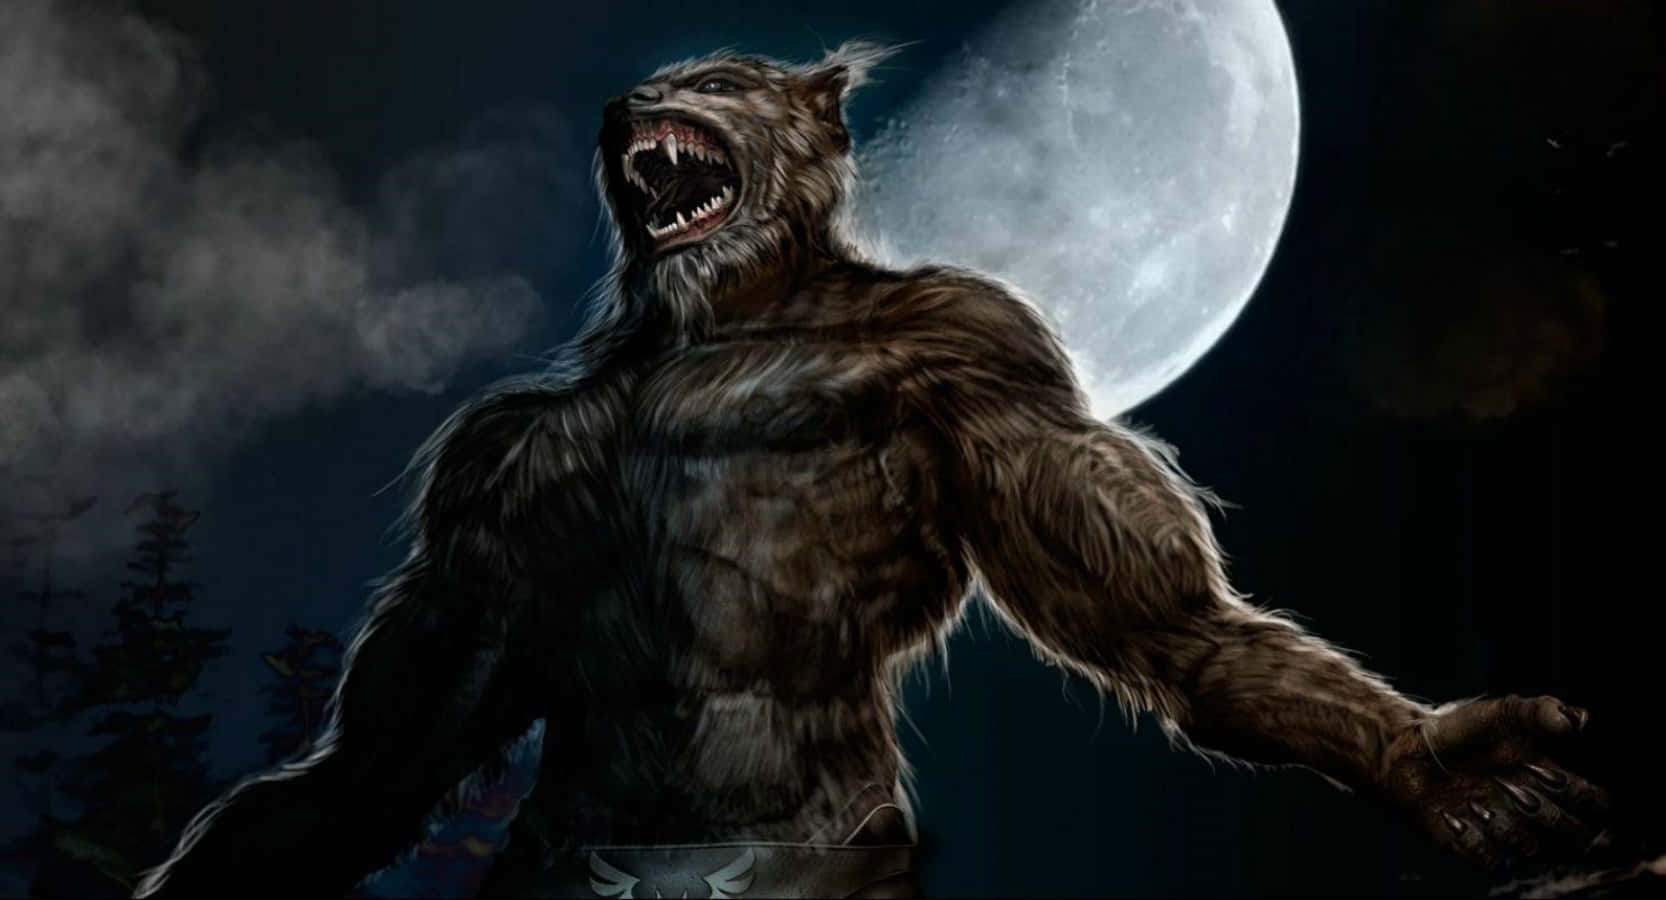 "The Werewolf Awakens"